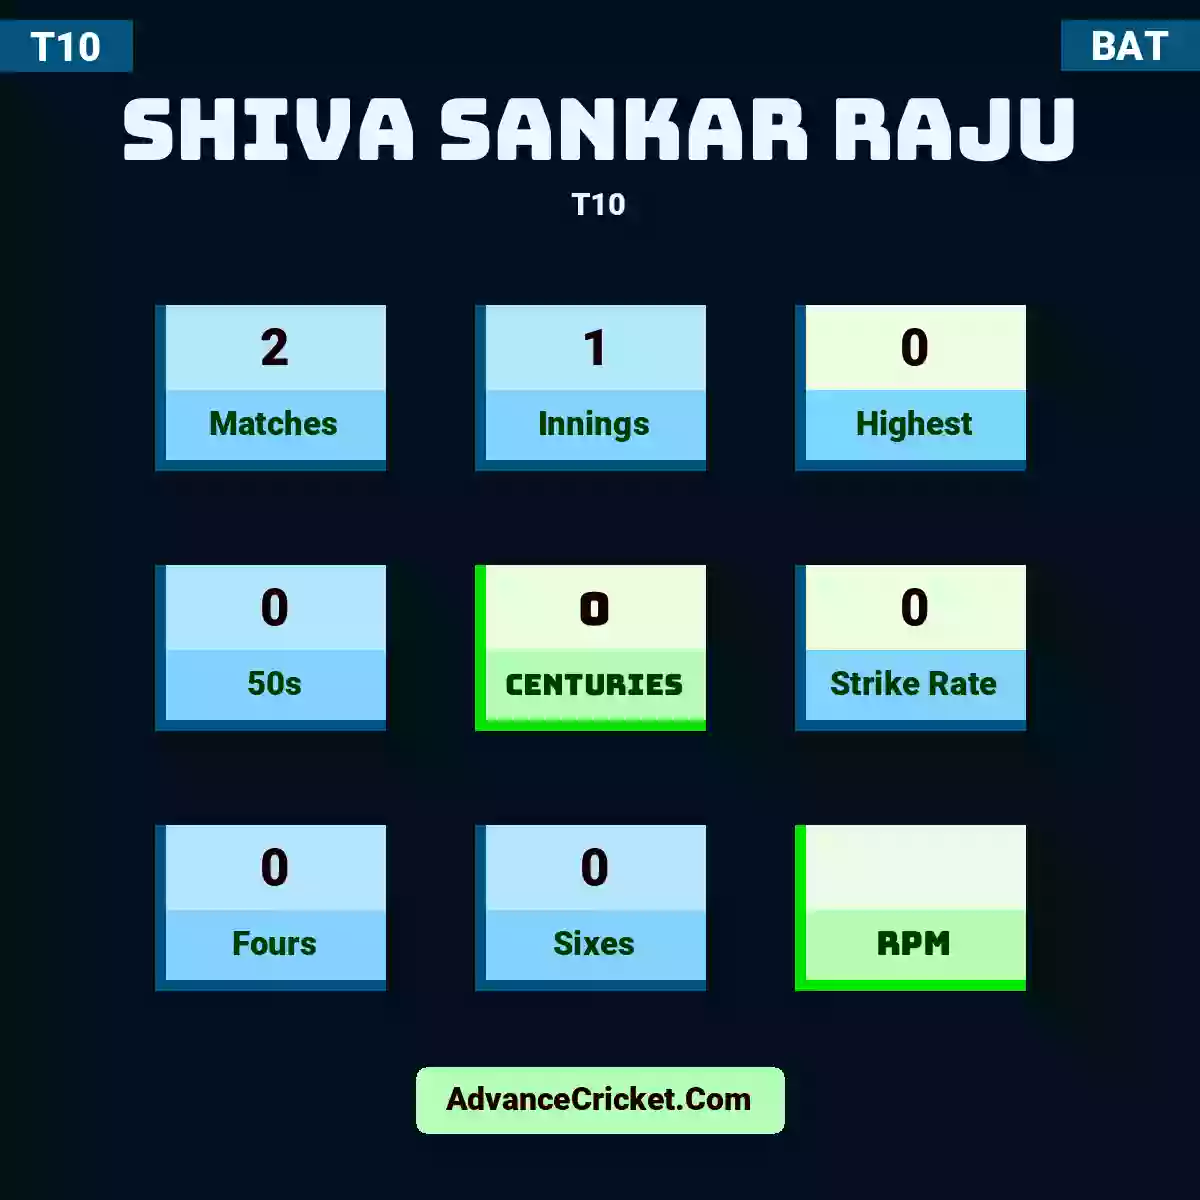 Shiva Sankar Raju T10 , Shiva Sankar Raju played 2 matches, scored 0 runs as highest, 0 half-centuries, and 0 centuries, with a strike rate of 0. S.Sankar.Raju hit 0 fours and 0 sixes.